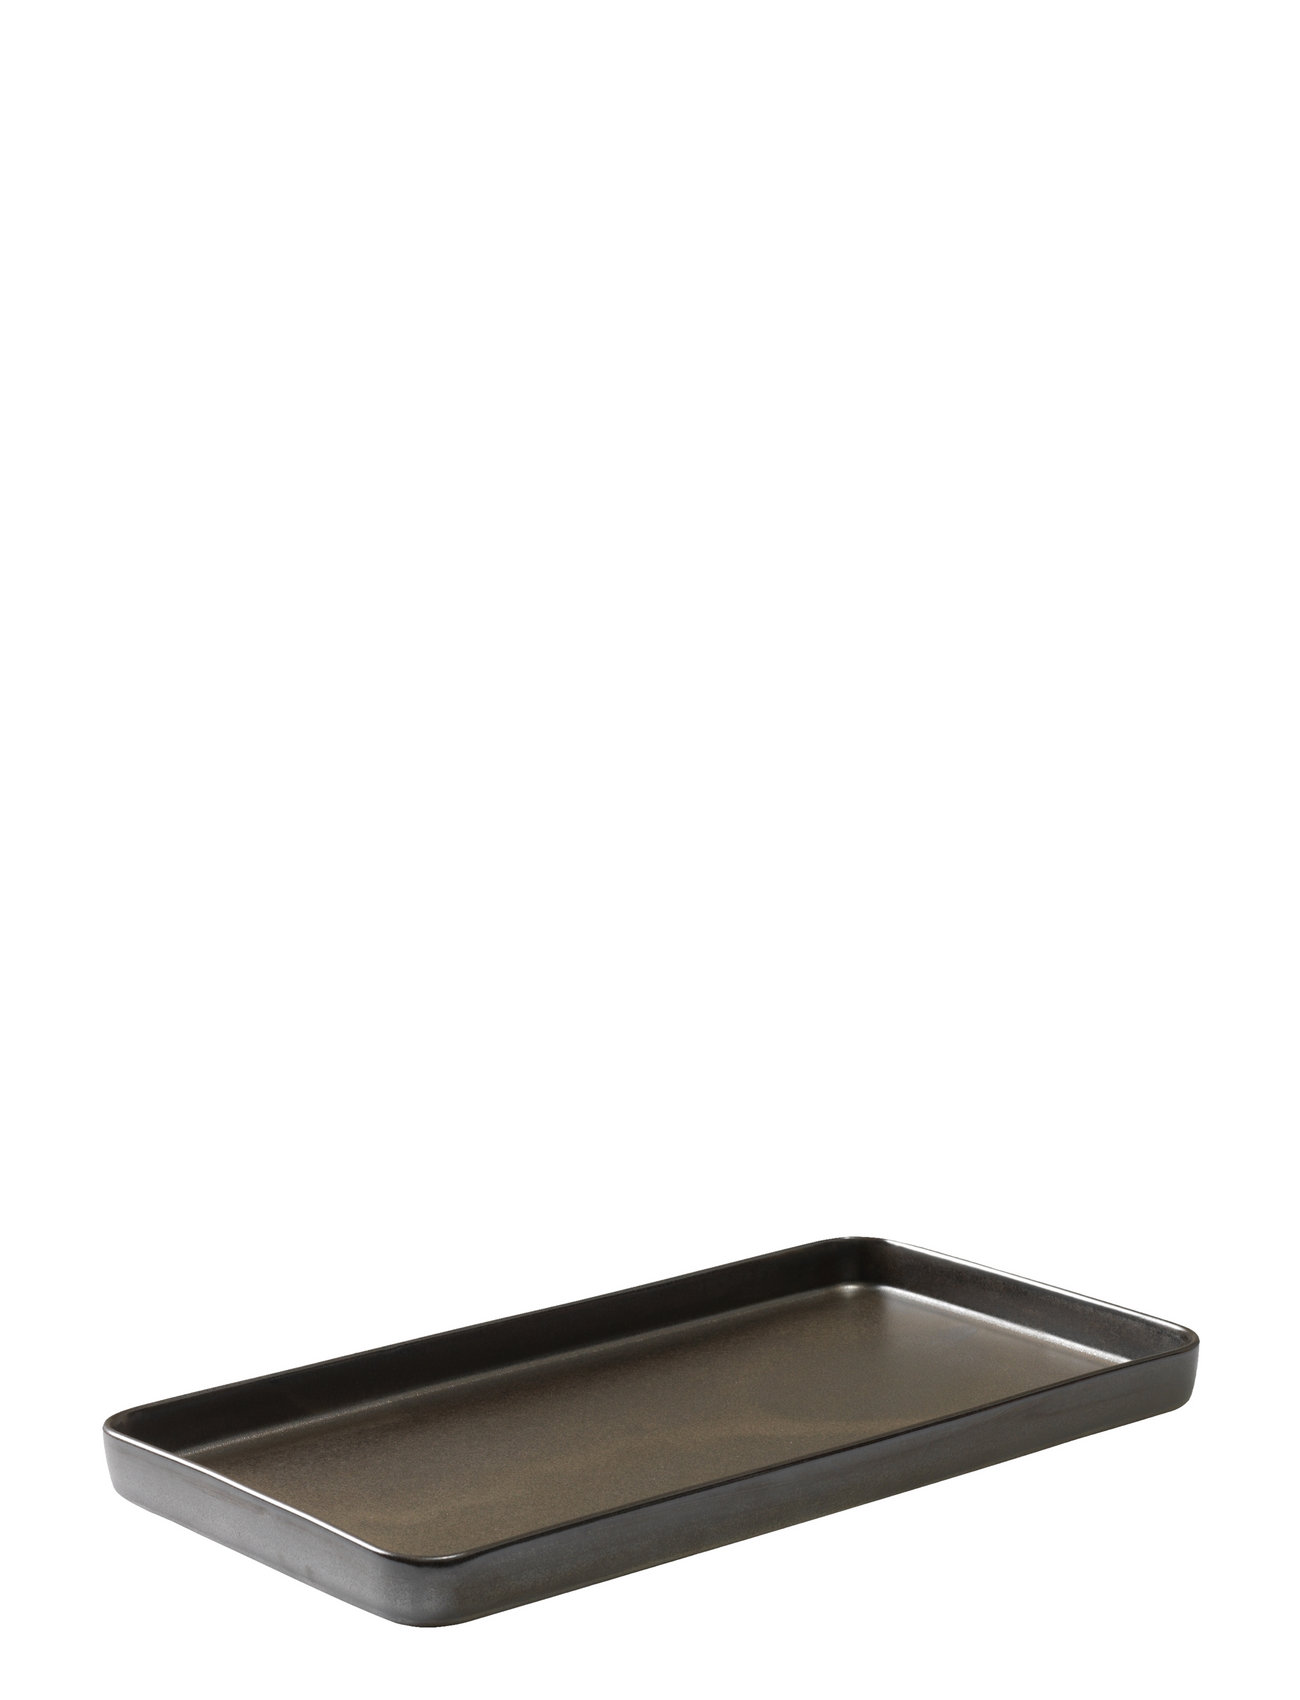 Raw Metallic Brown - Rectangular Dish Home Tableware Serving Dishes Serving Platters Brown Aida